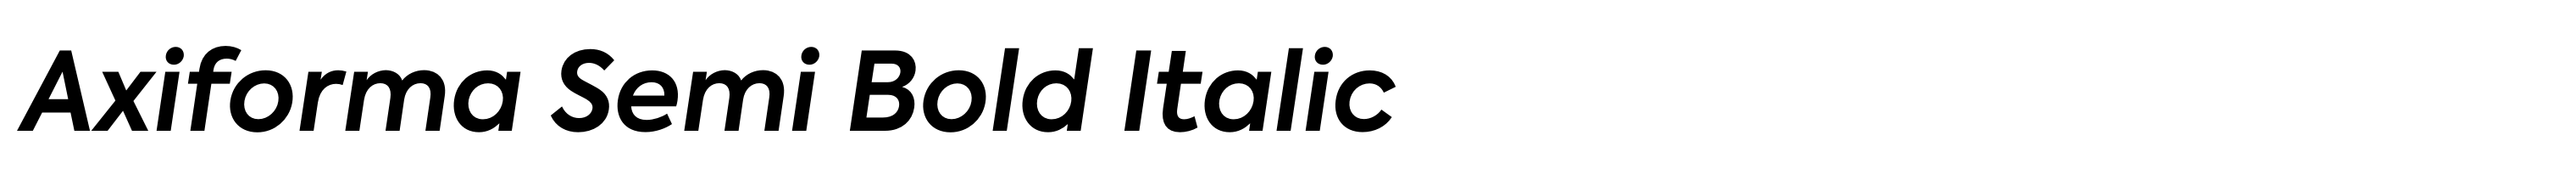 Axiforma Semi Bold Italic